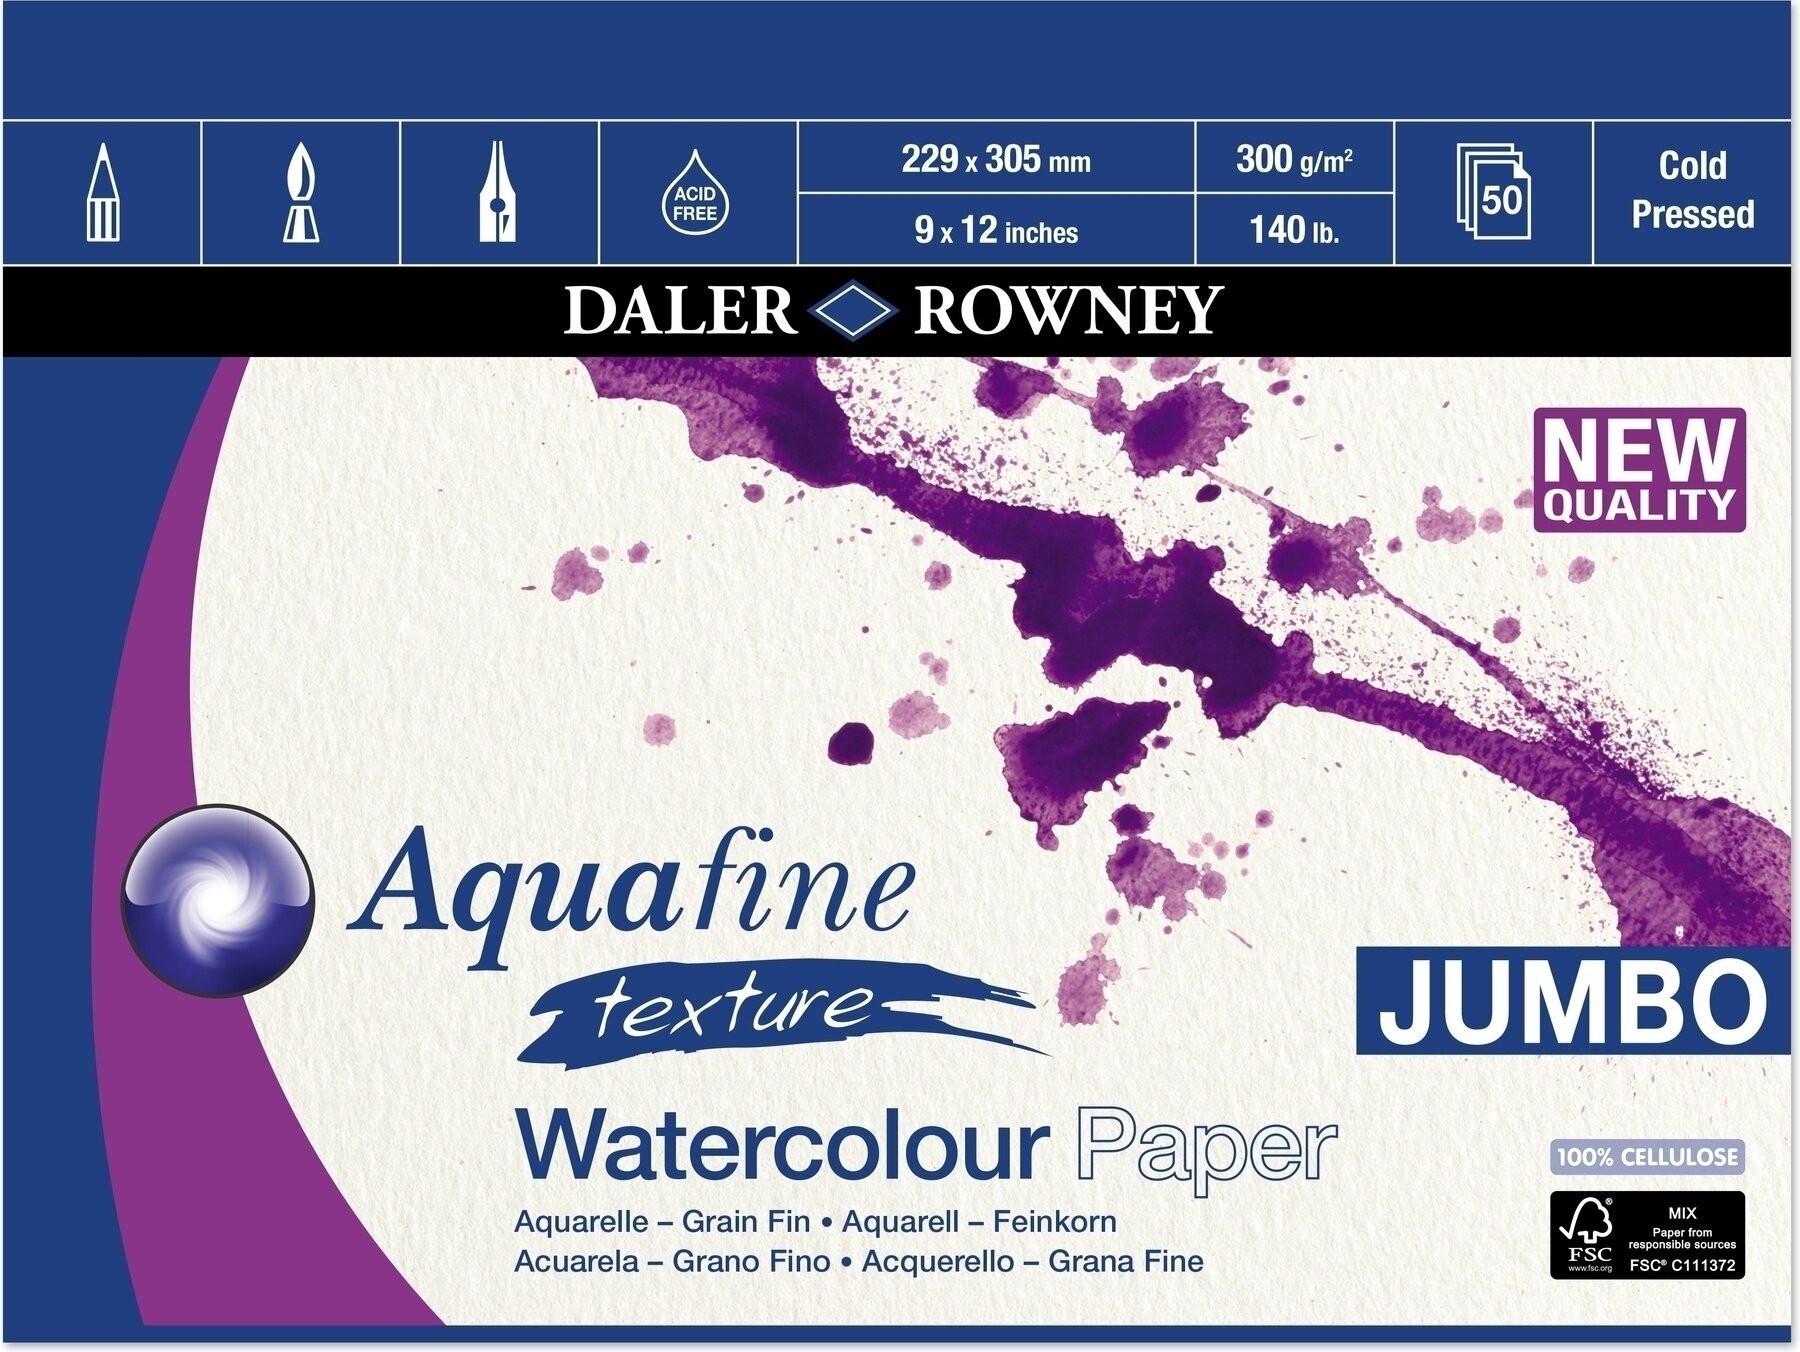 Luonnosvihko Daler Rowney Aquafine Texture Watercolour Paper Aquafine 22,9 x 30,5 cm 300 g Luonnosvihko